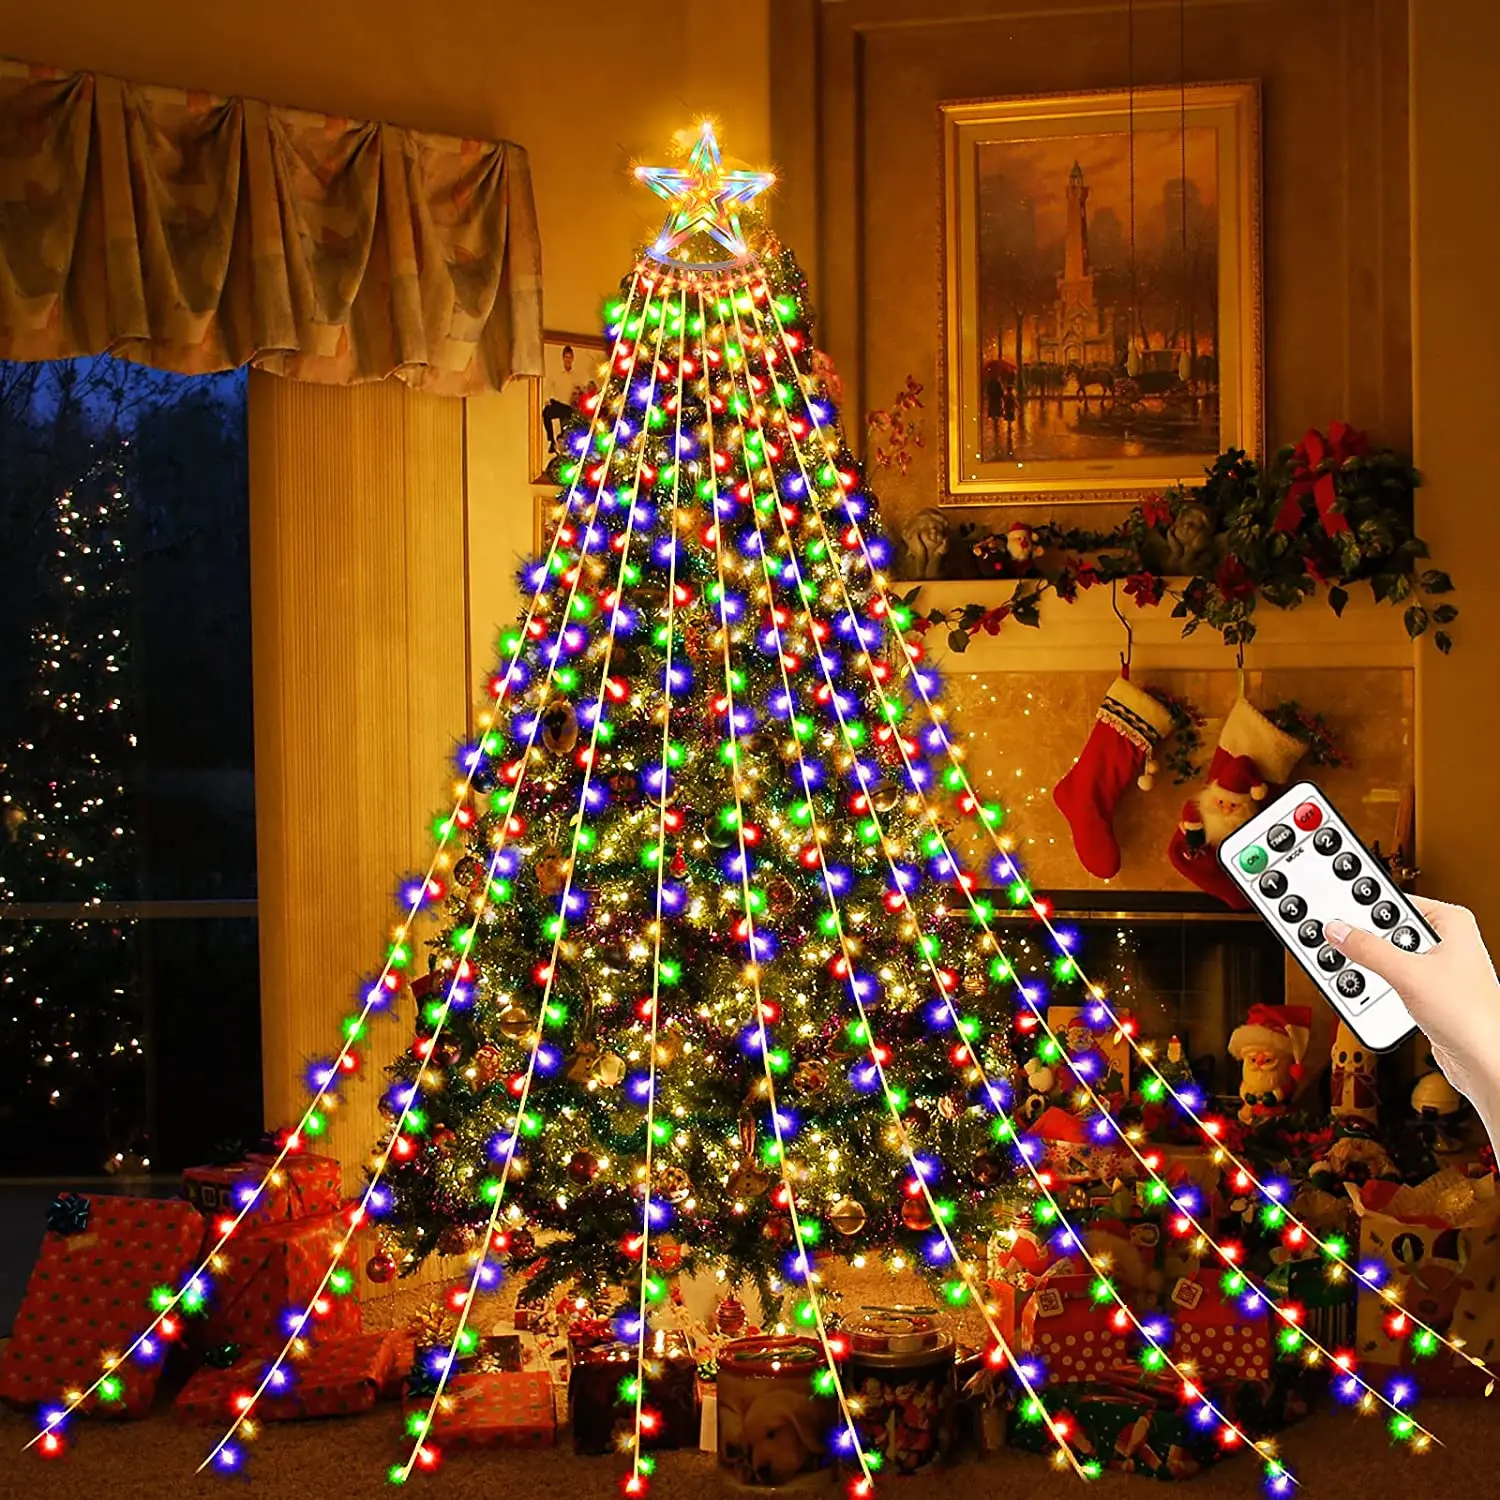 Smart DIY Christmas Lights APP Remote Control LED String Lights Fairy  Garland for Navidad Home Room Xmas Decoration Tree Outdoor - AliExpress